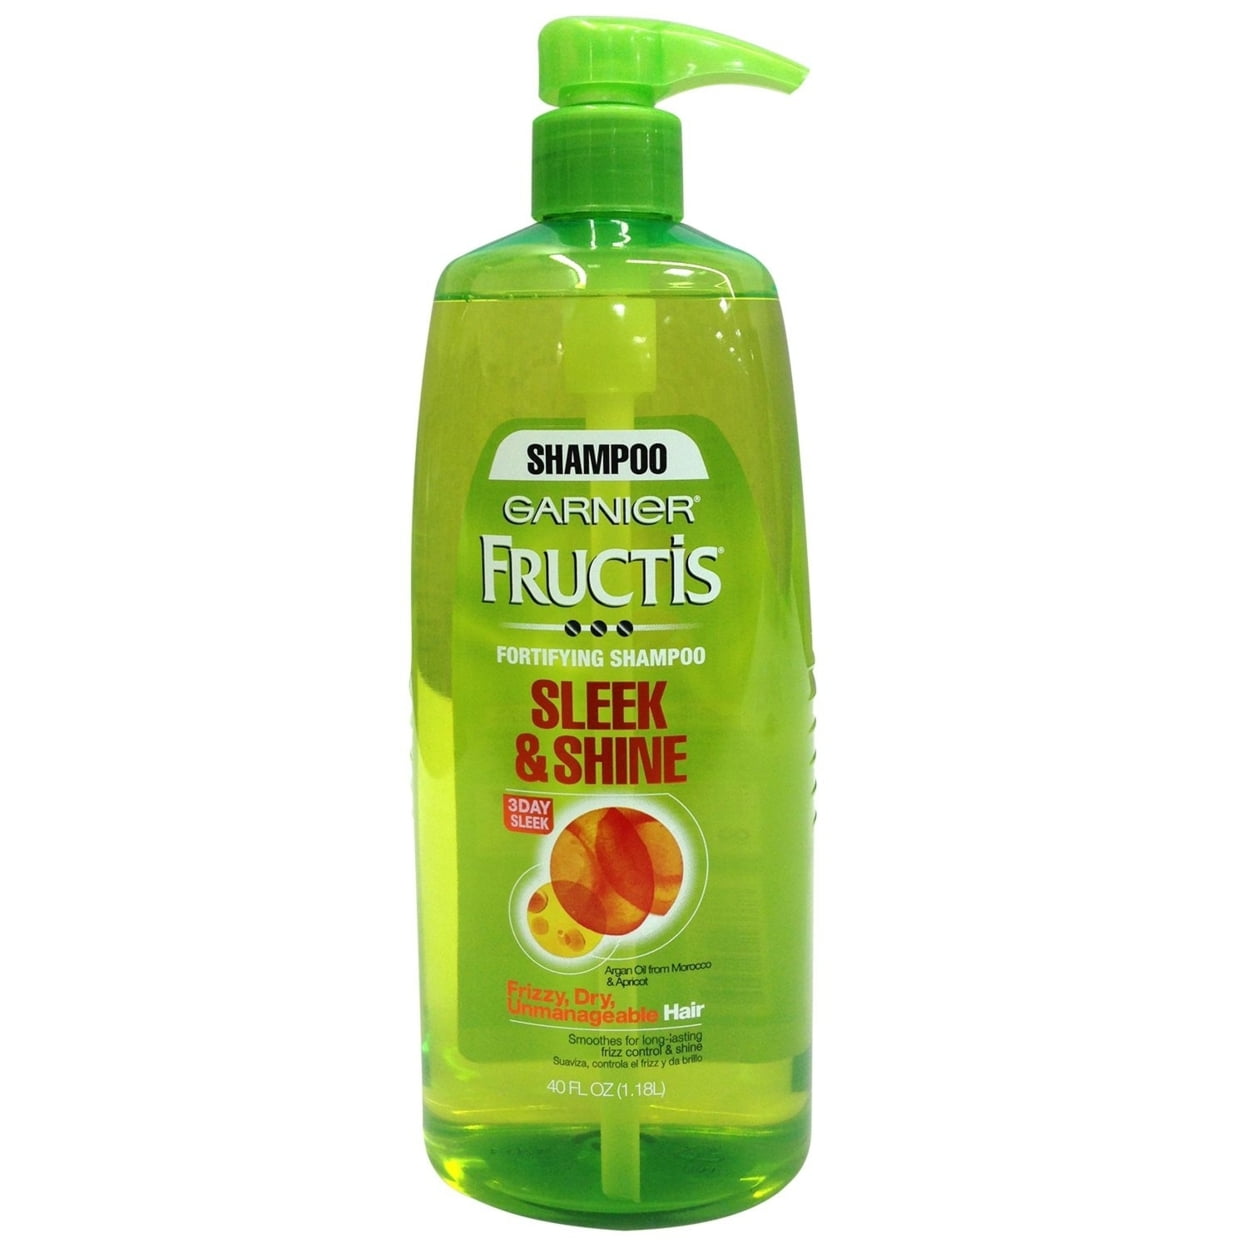 Garnier Fructis Shampoo Ounce 40 - Pump 